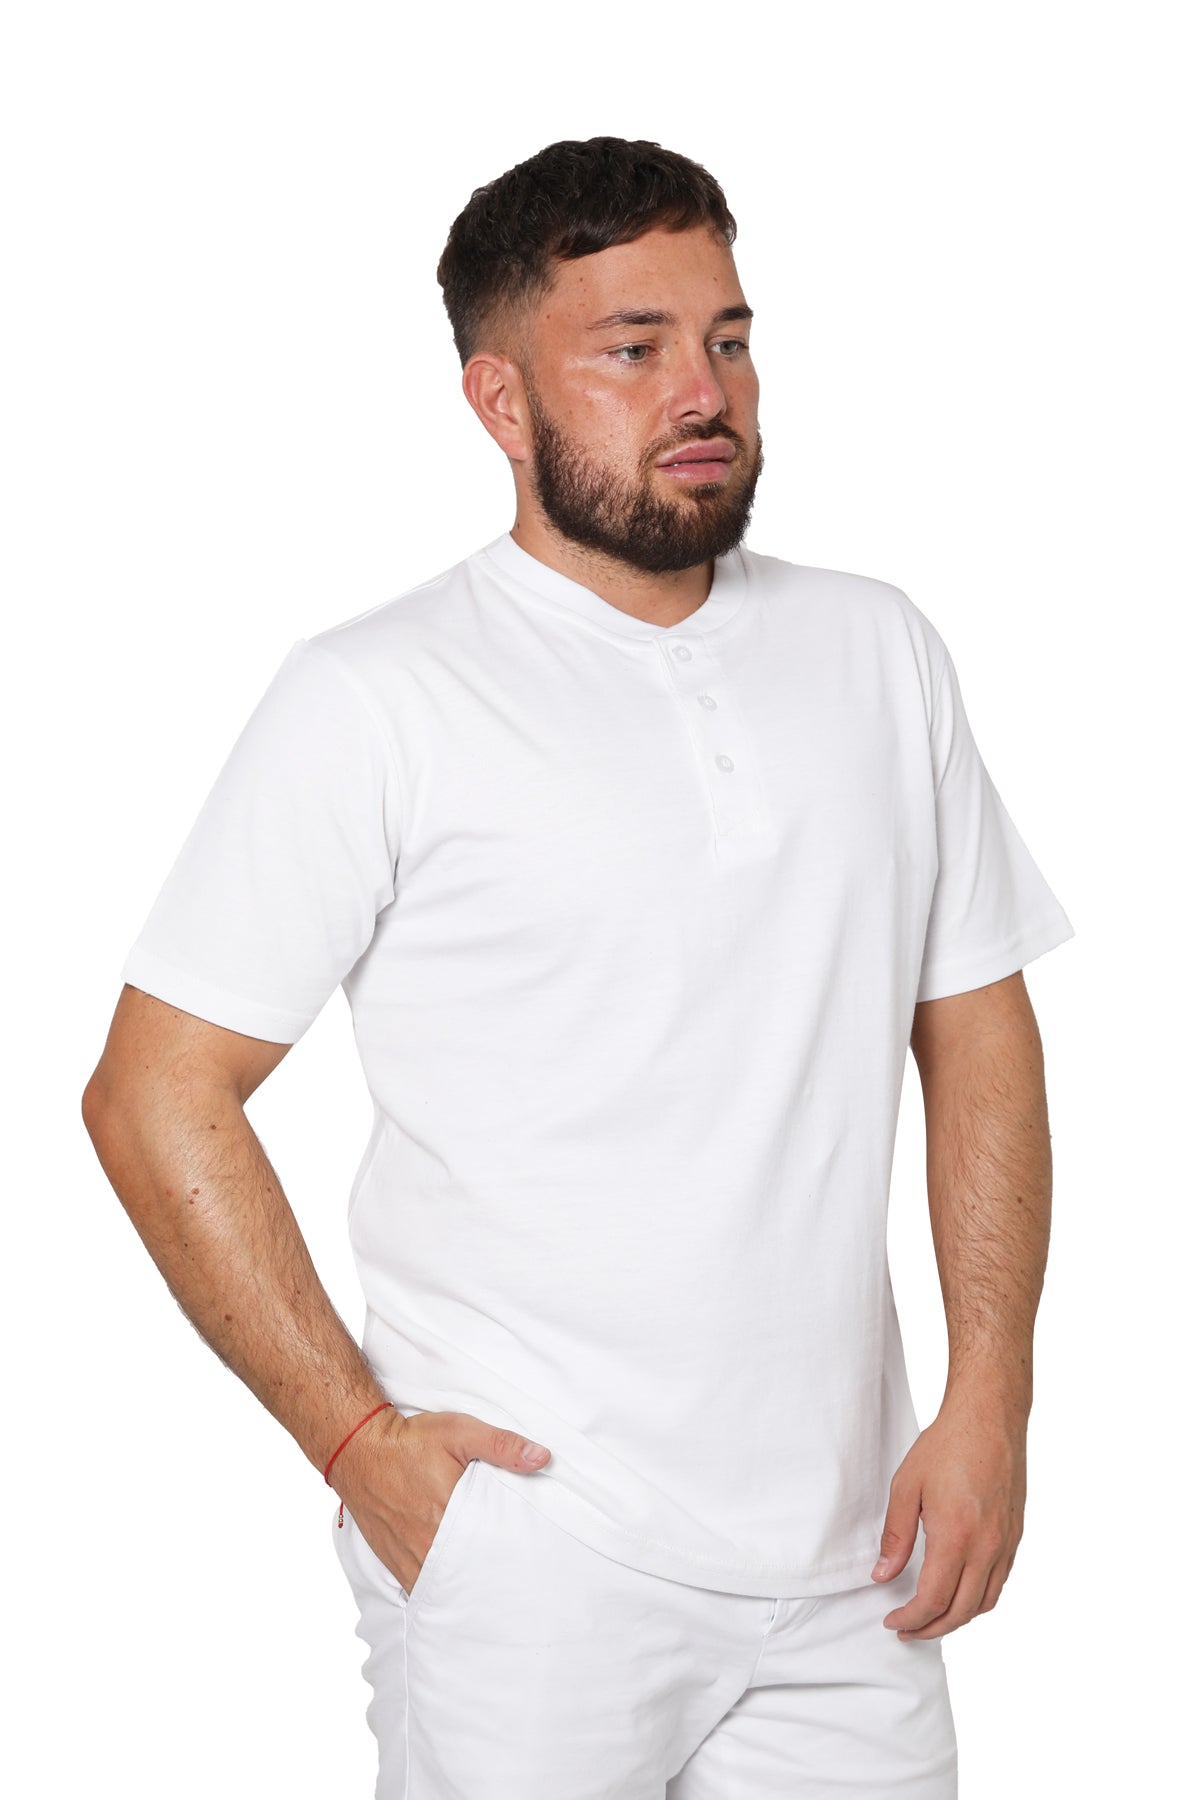 Short Sleeve Plain Henley T-Shirt with Grandad Collar - White